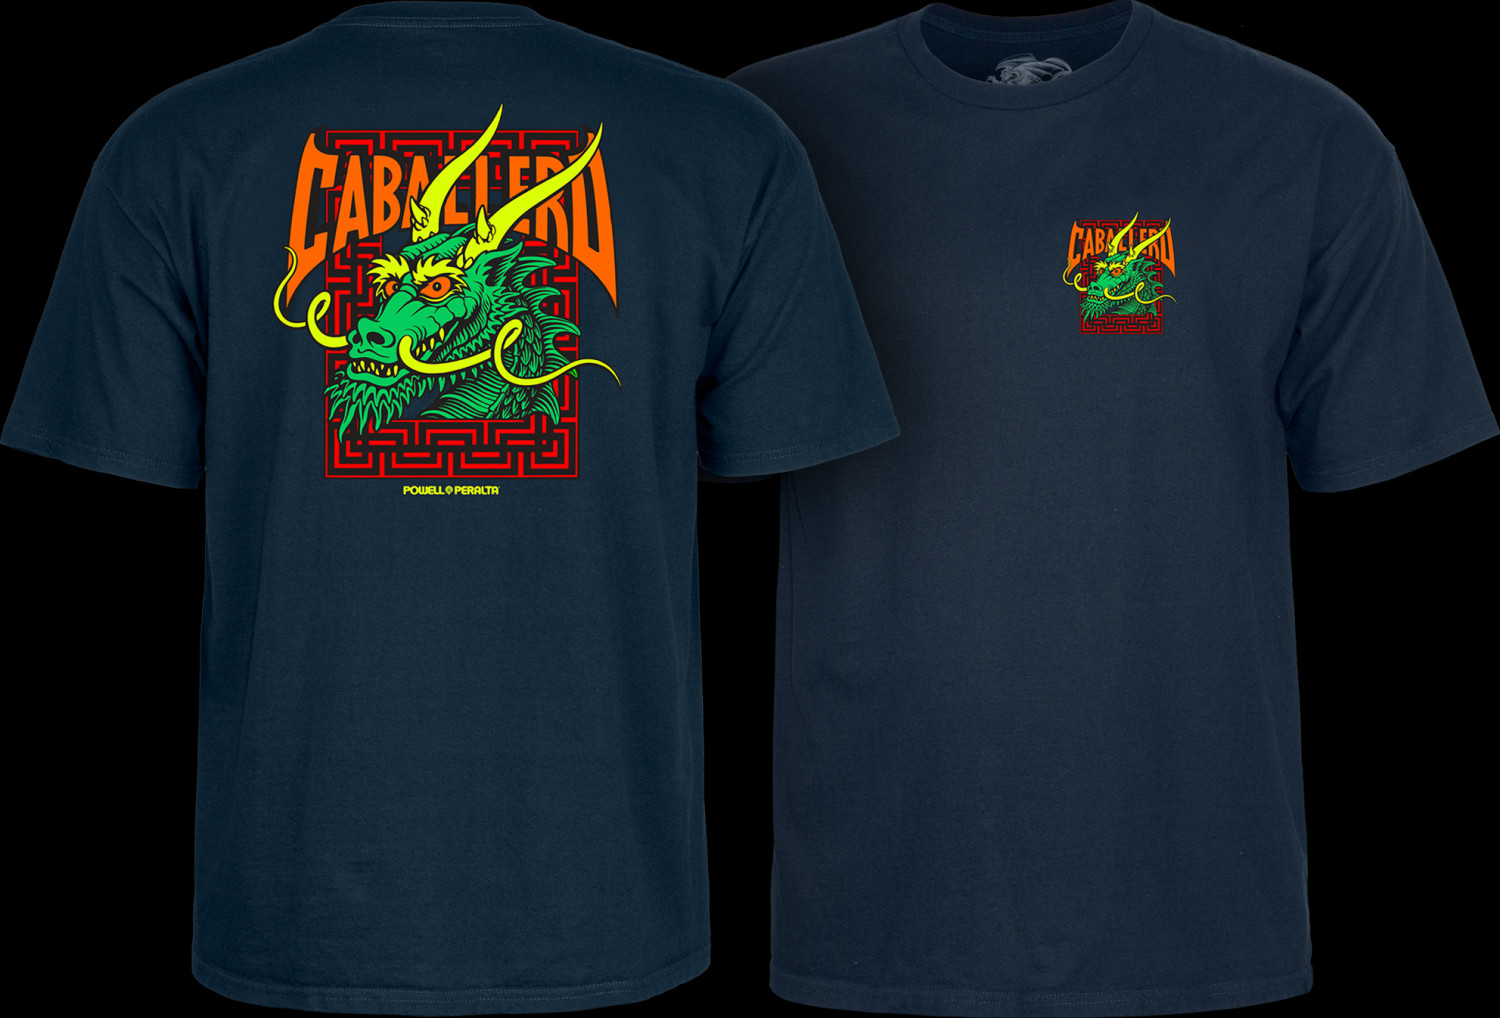 Powell Peralta Steve Caballero Street Dragon T-shirt - Navy Photo #1 ...